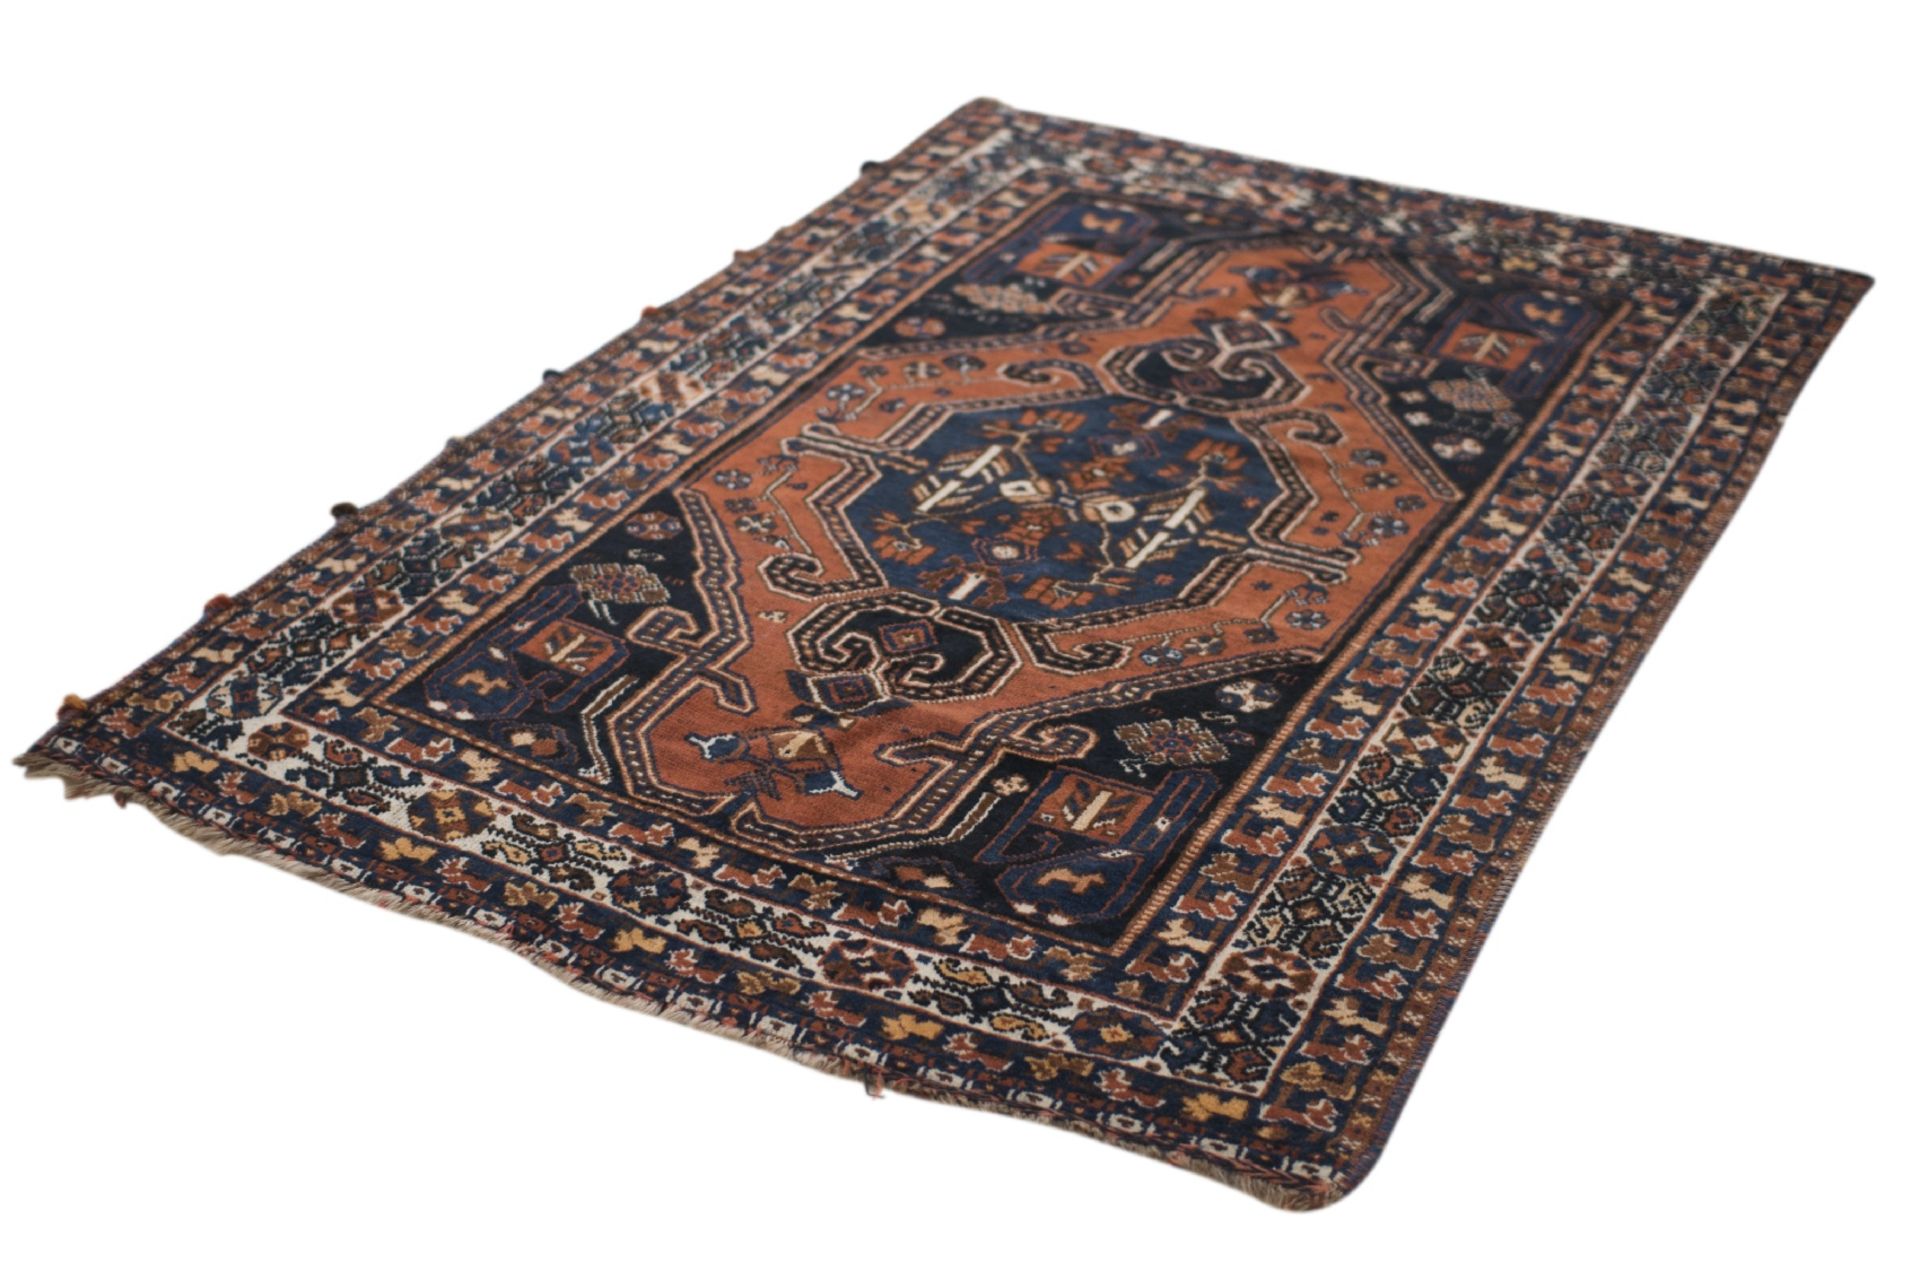 Shiraz Teppich | Shiraz carpet - Image 2 of 4